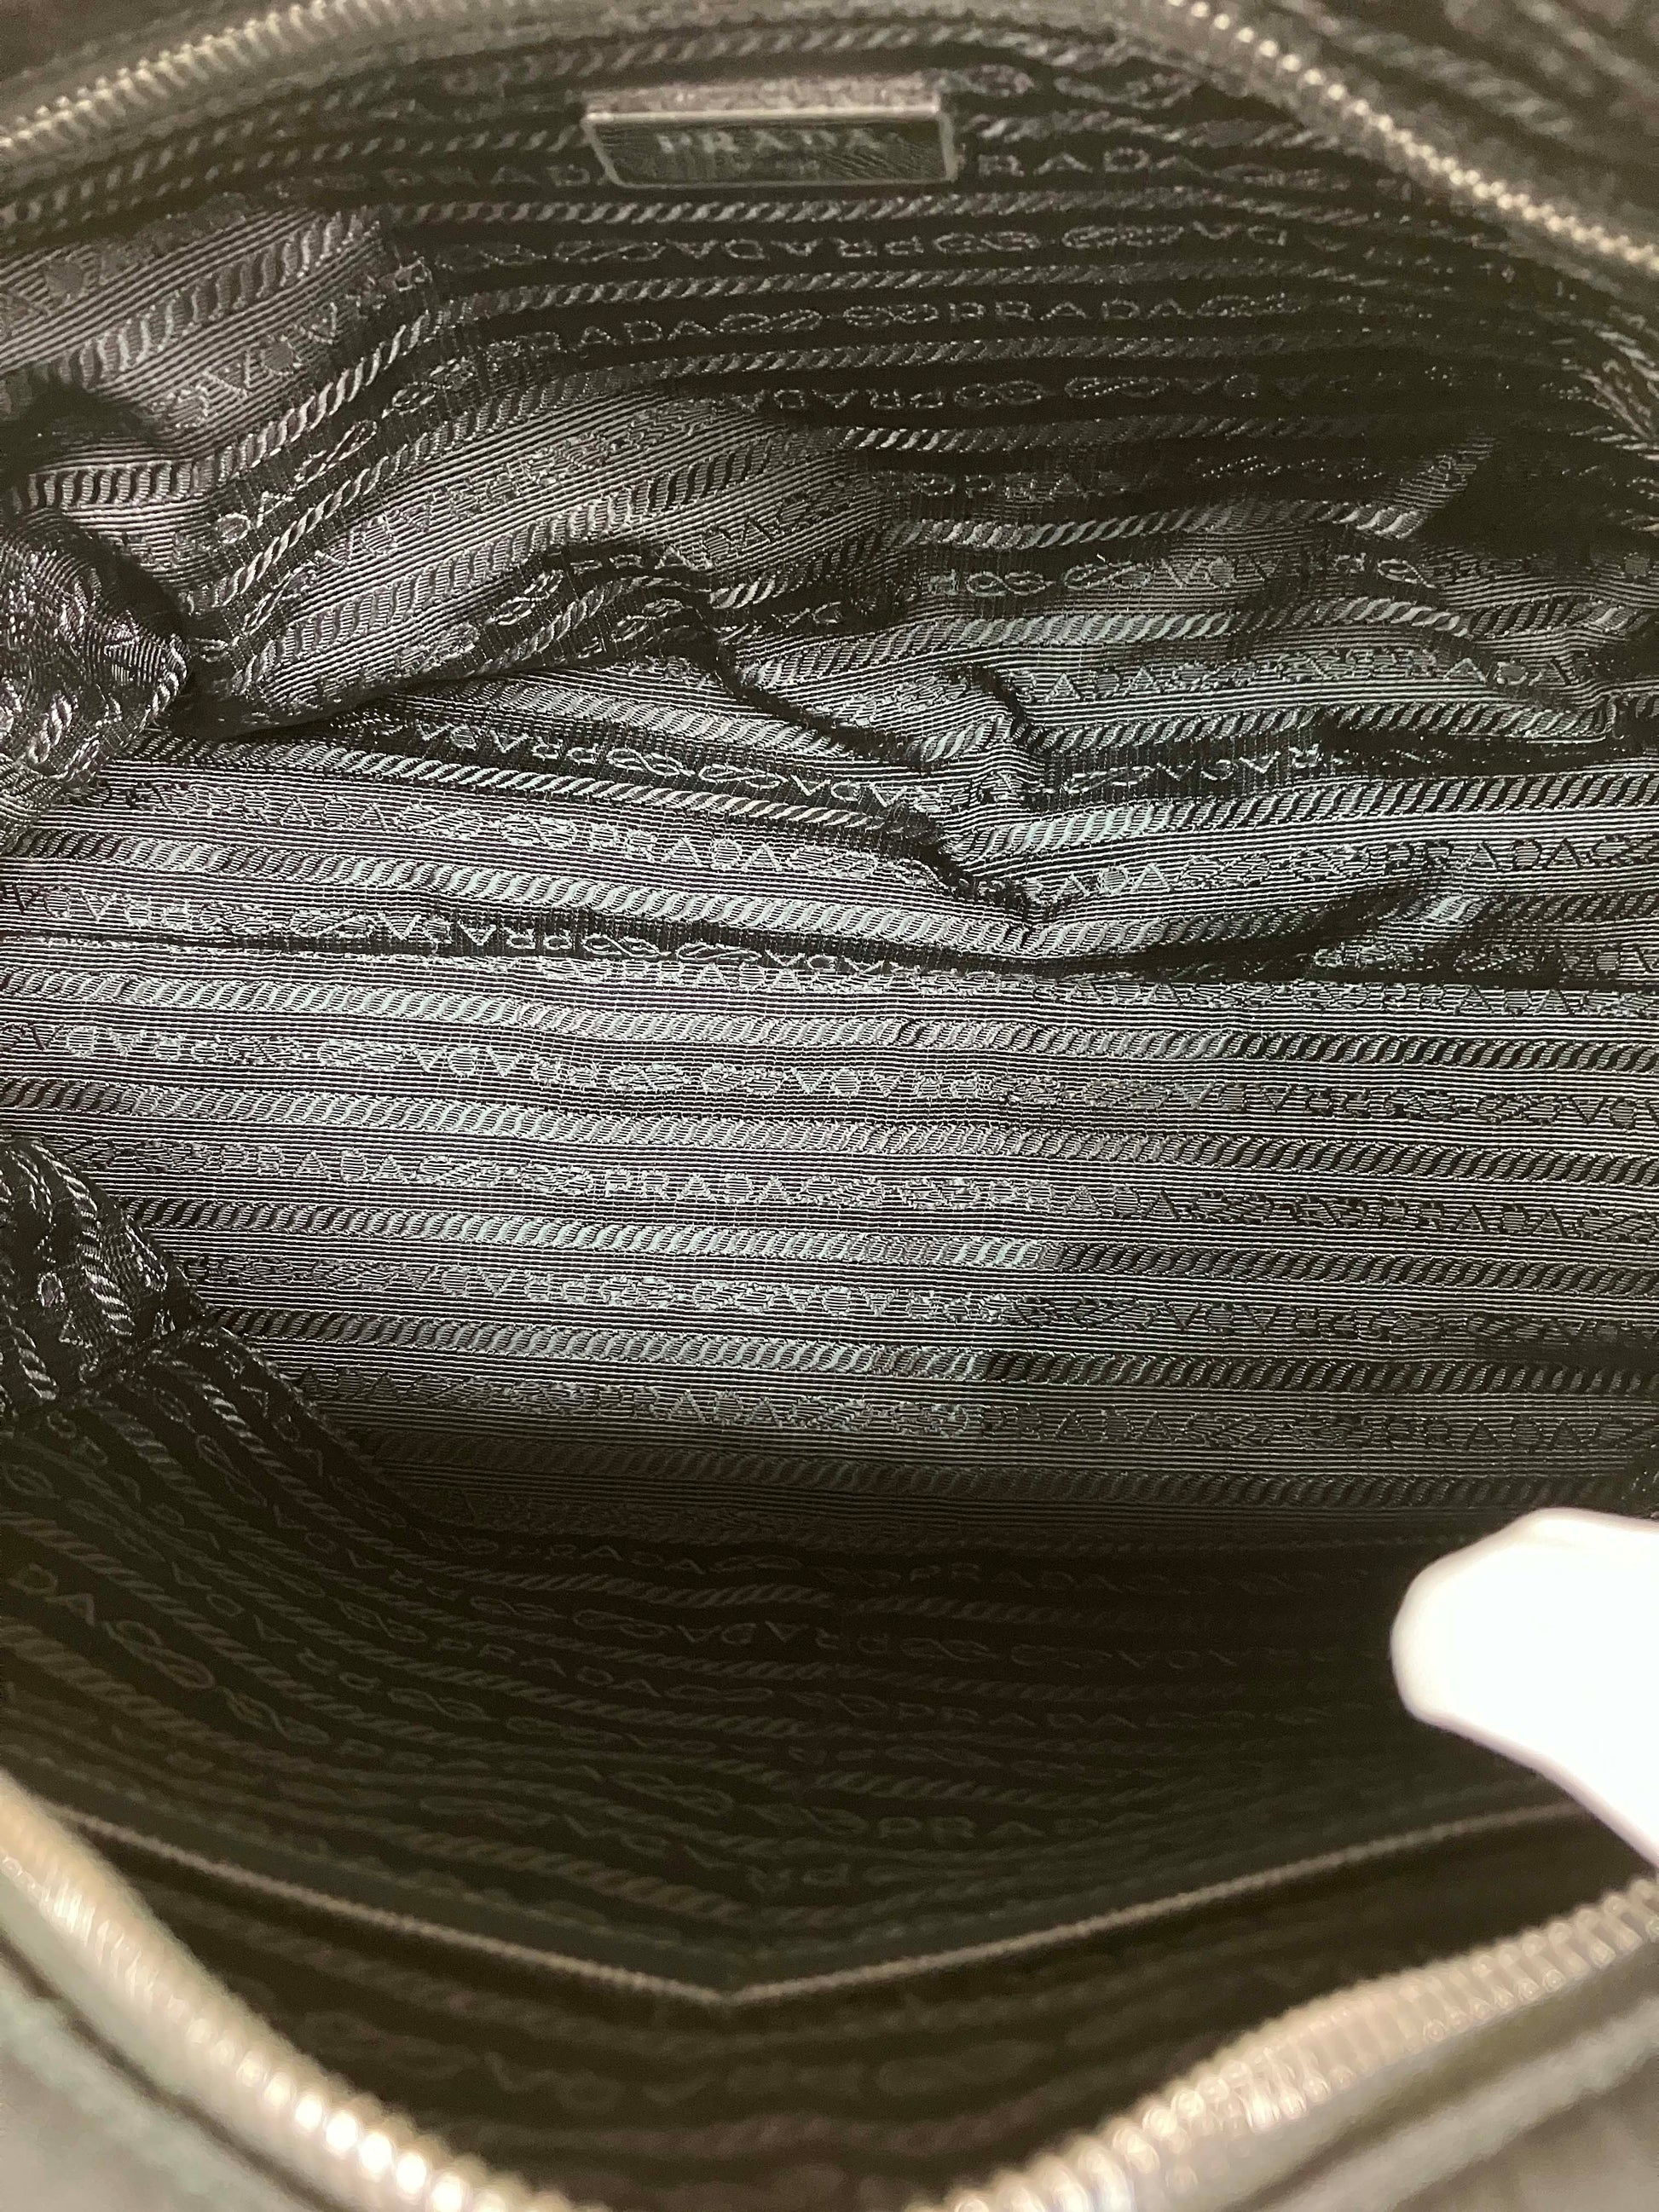 Prada Black Tessuto Nylon Quilted Chain Crossbody Bag – Queen Bee